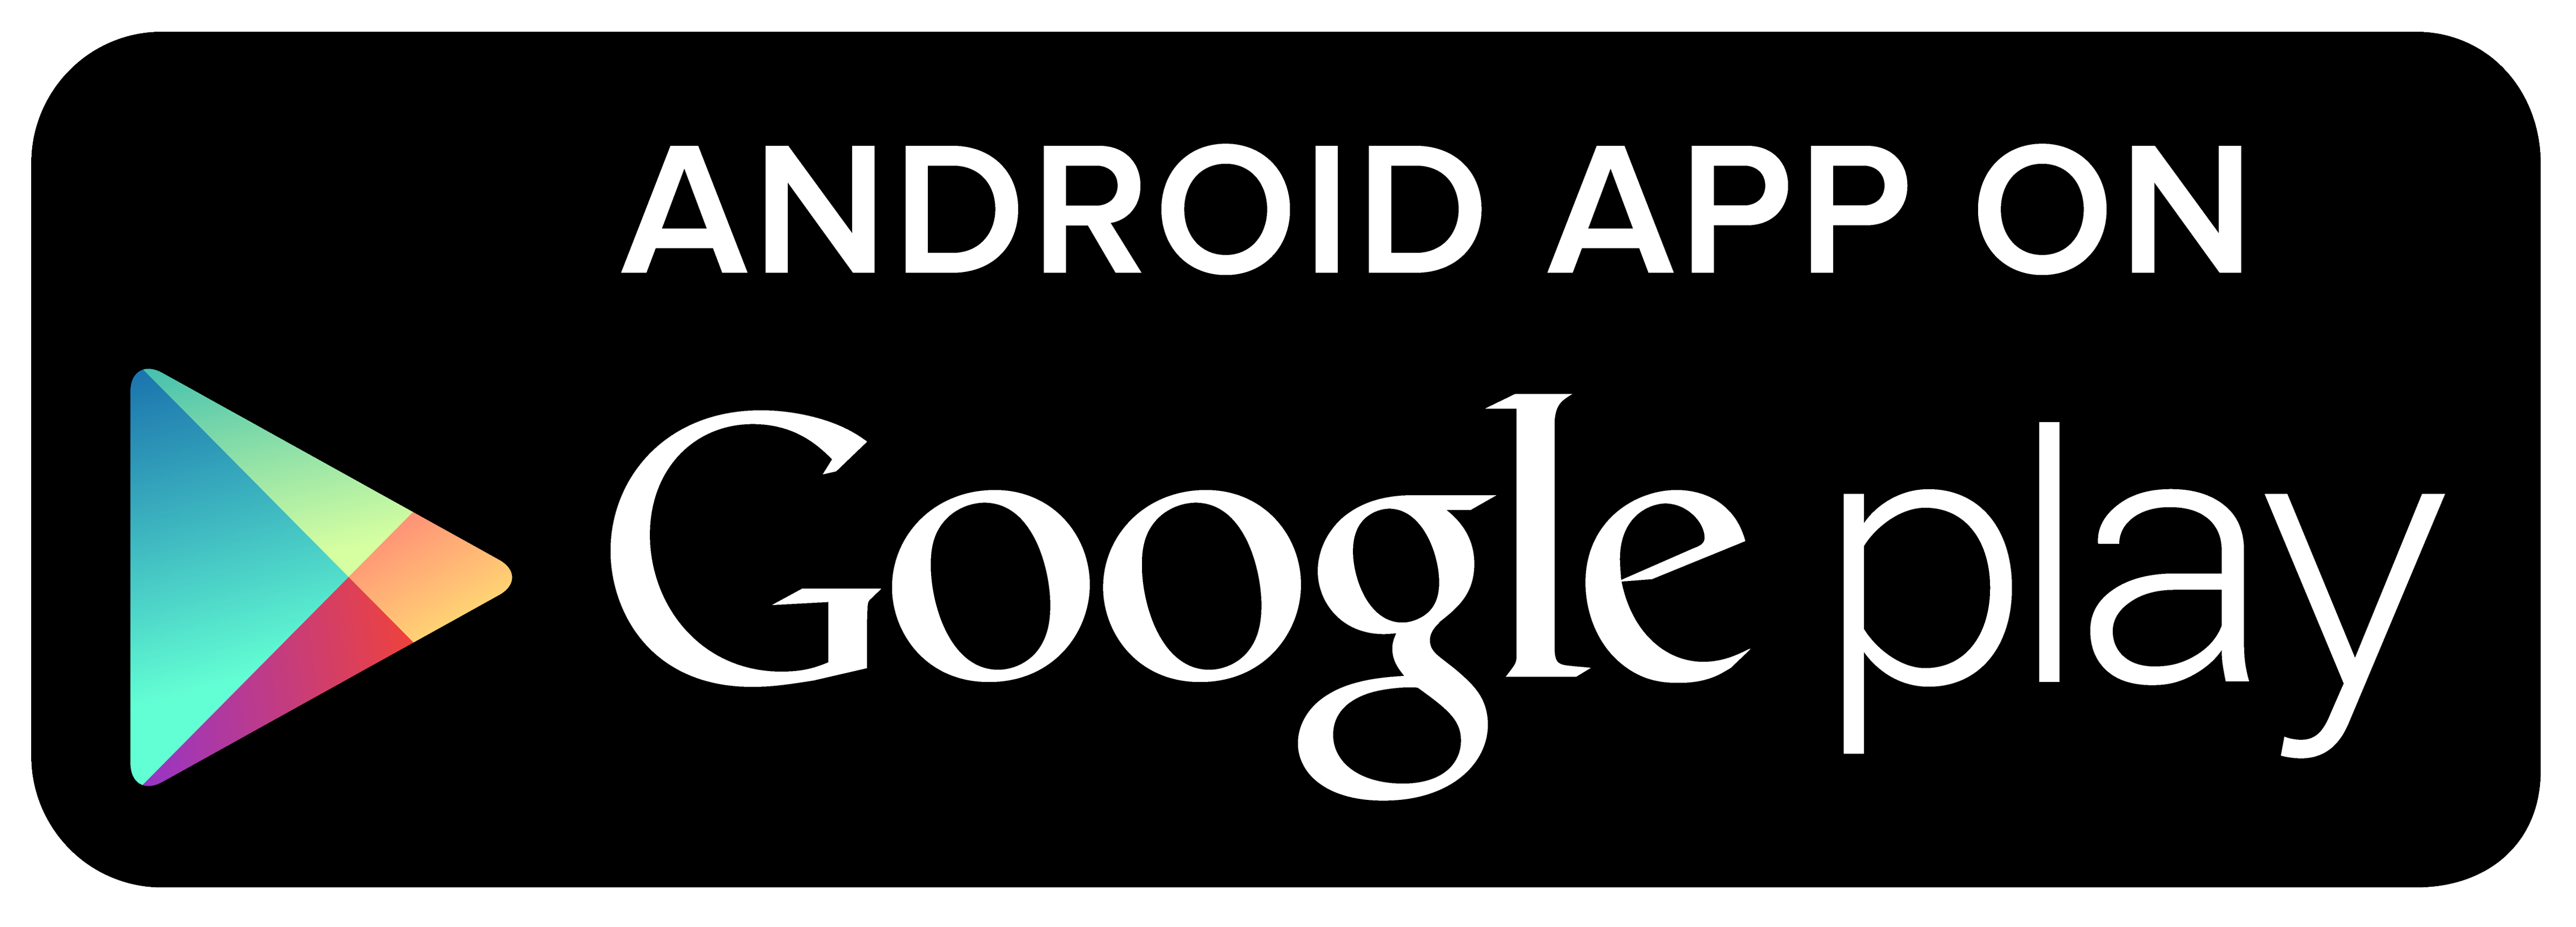 Google play ota. App Store Google Play. Логотип гугл плей. Иконка app Store и Google Play. Иконки эпстор и гуглплей.